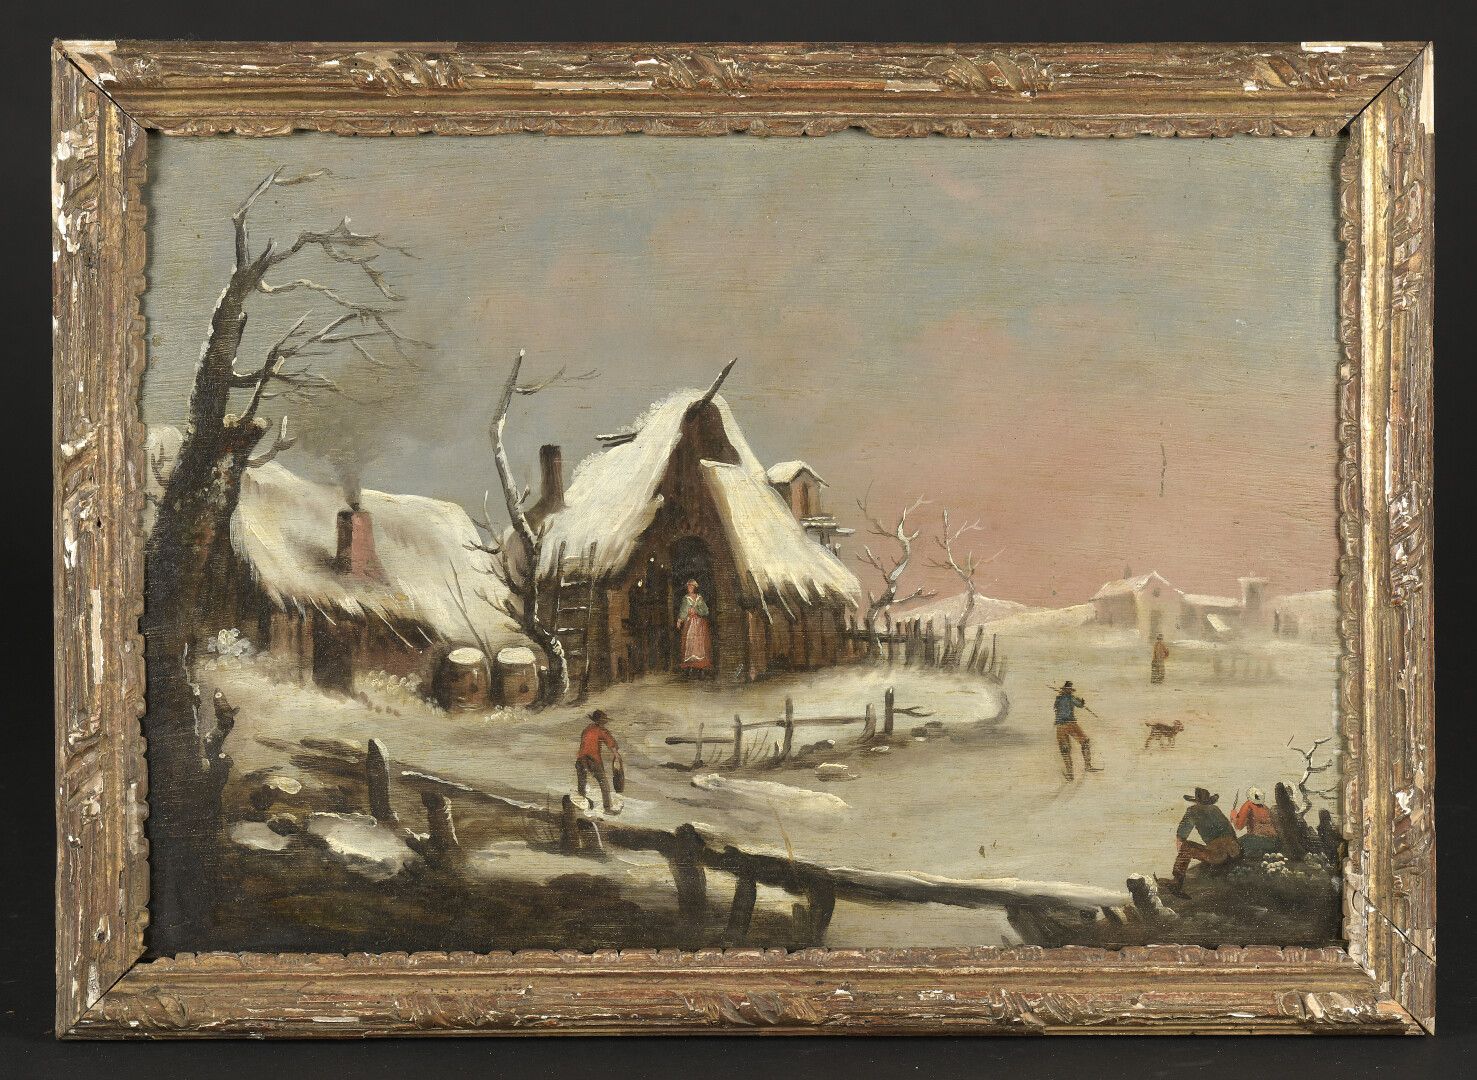 Null 18世纪末的弗拉芒画派

冬季景观

小组。

36 x 53 厘米